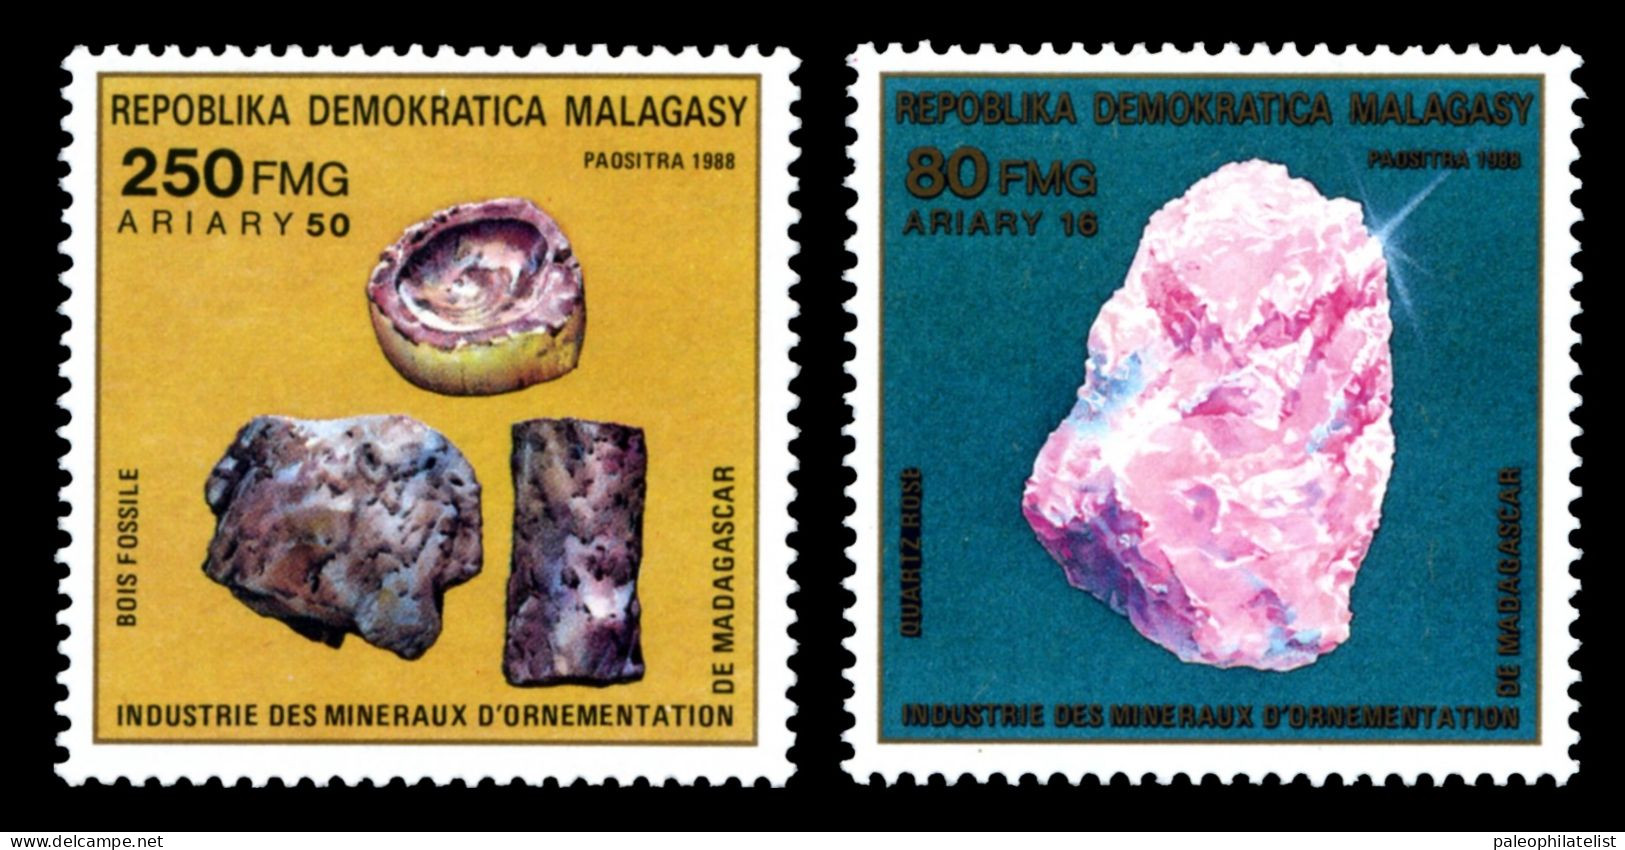 Madagaskar 1989  "Ornamental Mineral Industry", Petrified Wood, Minerals - Préhistoriques